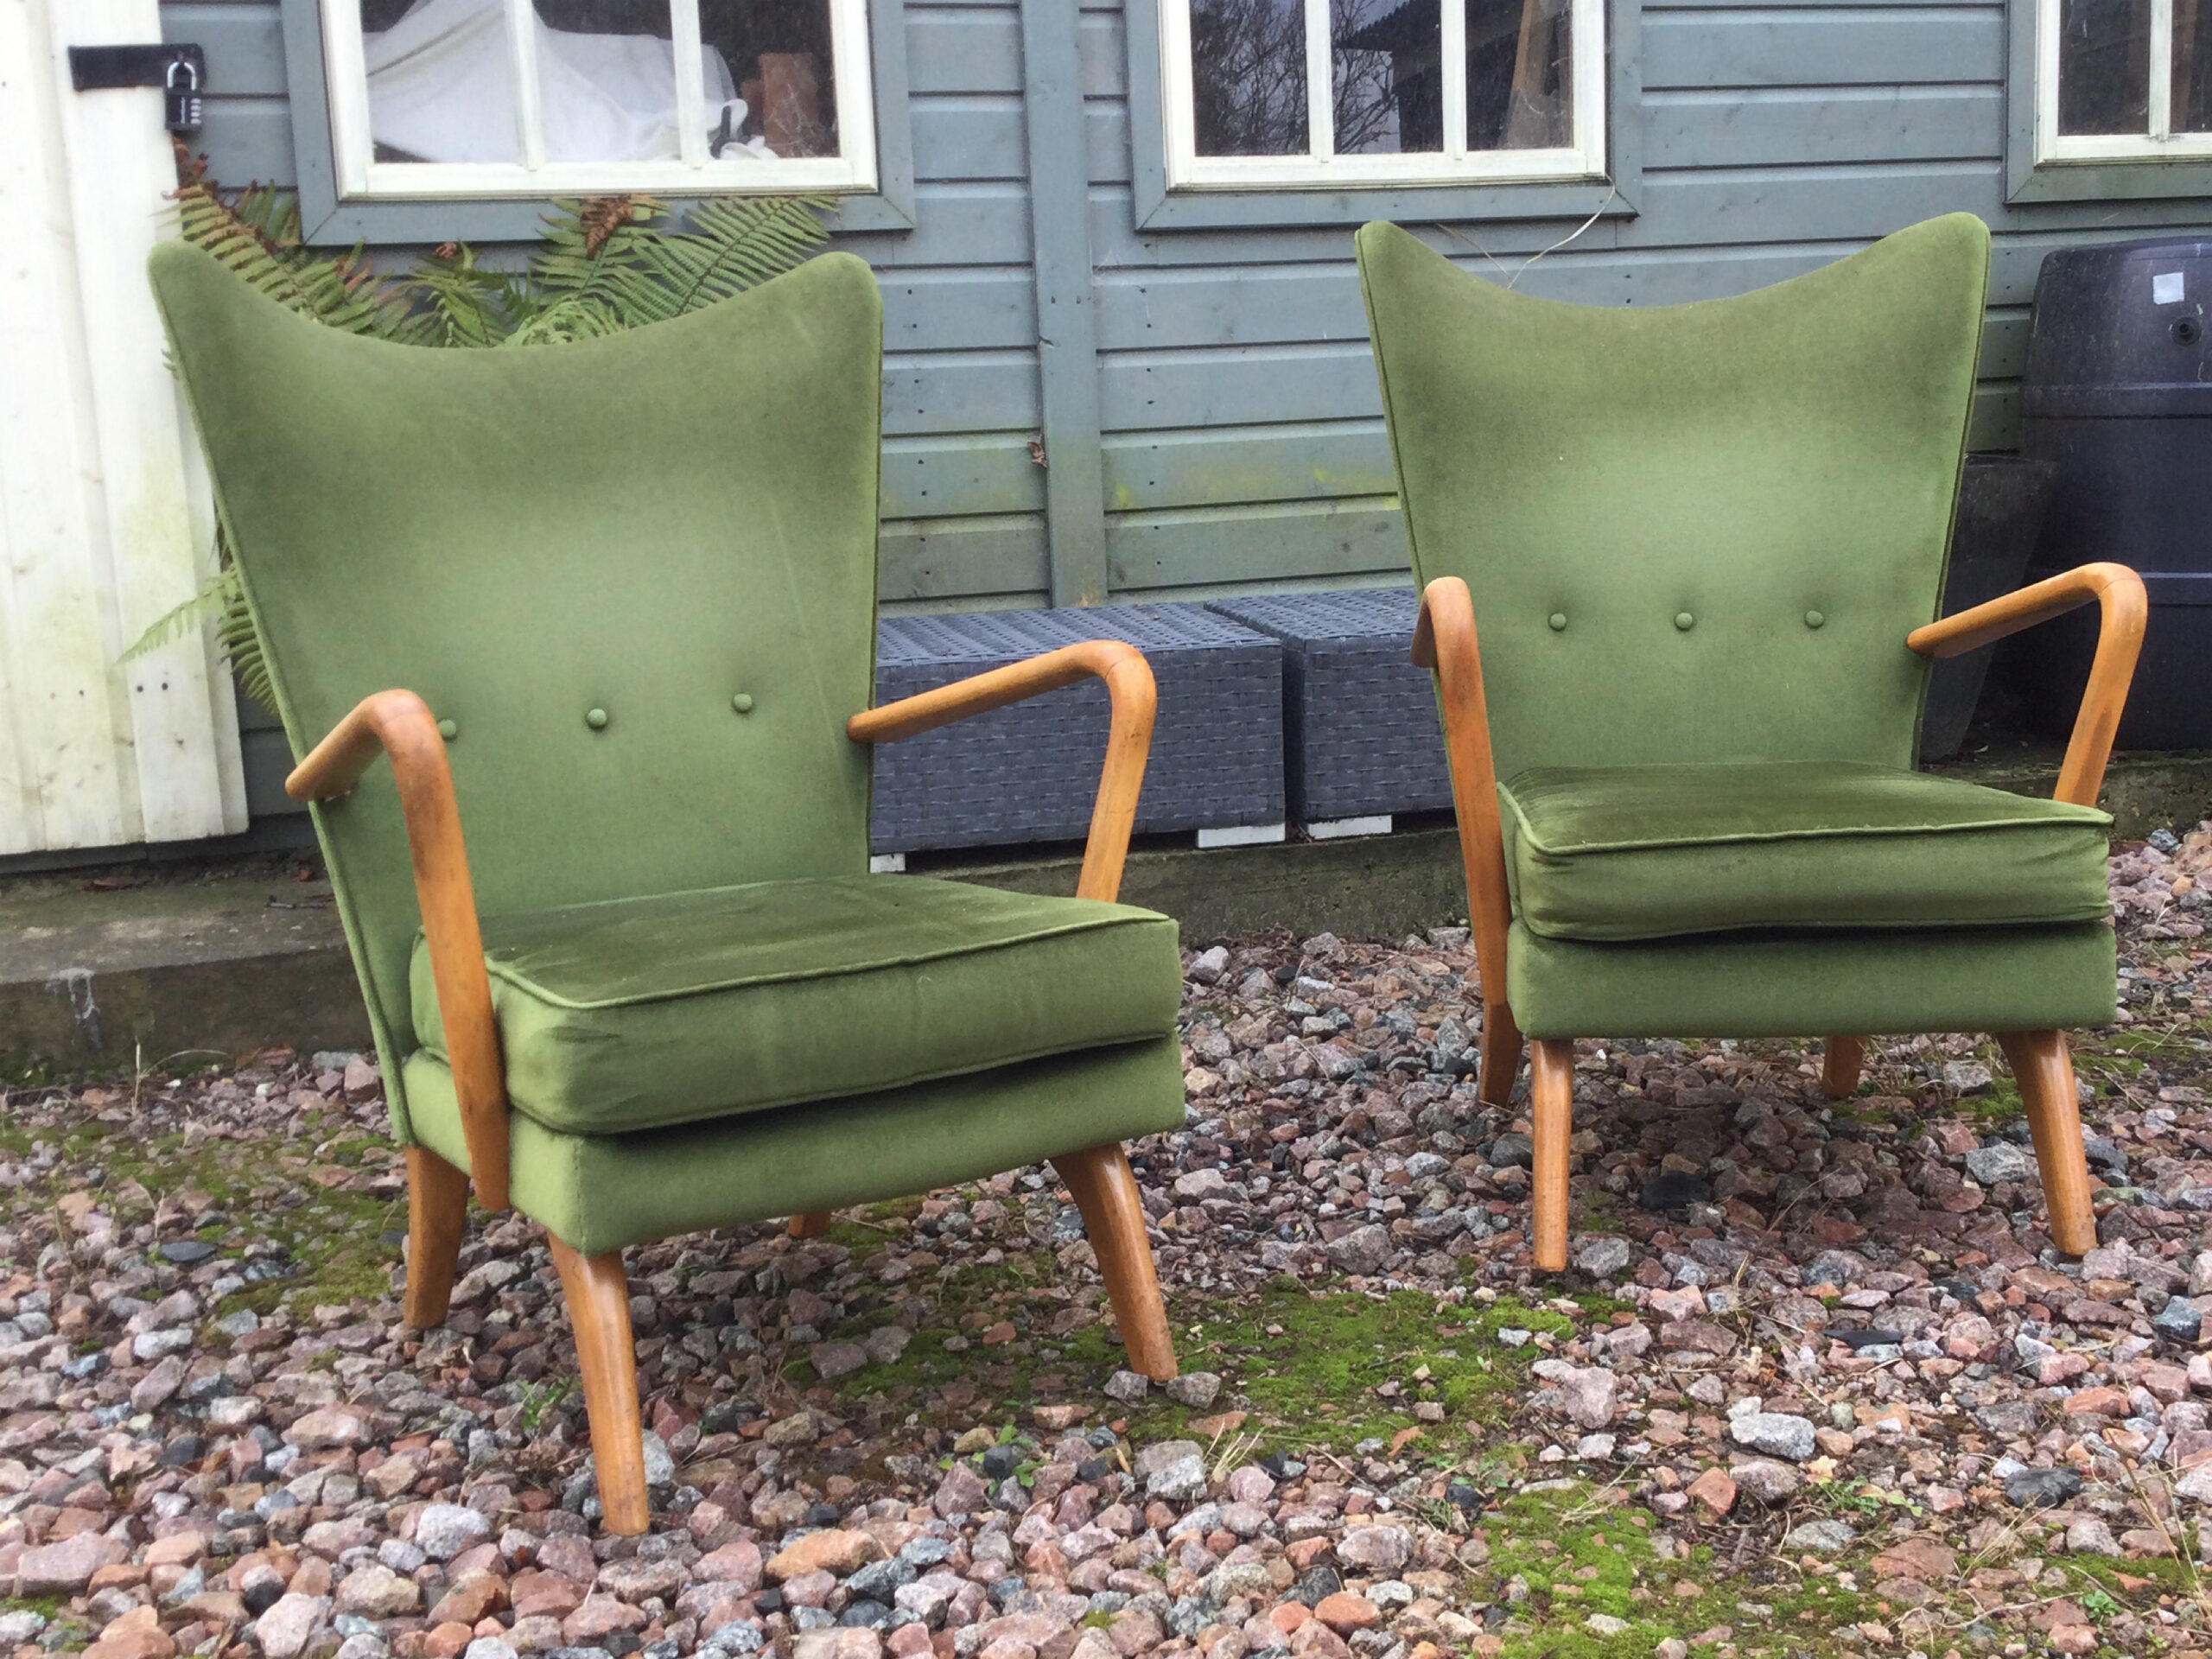 Howard Keith Bambino Chairs, before refurb